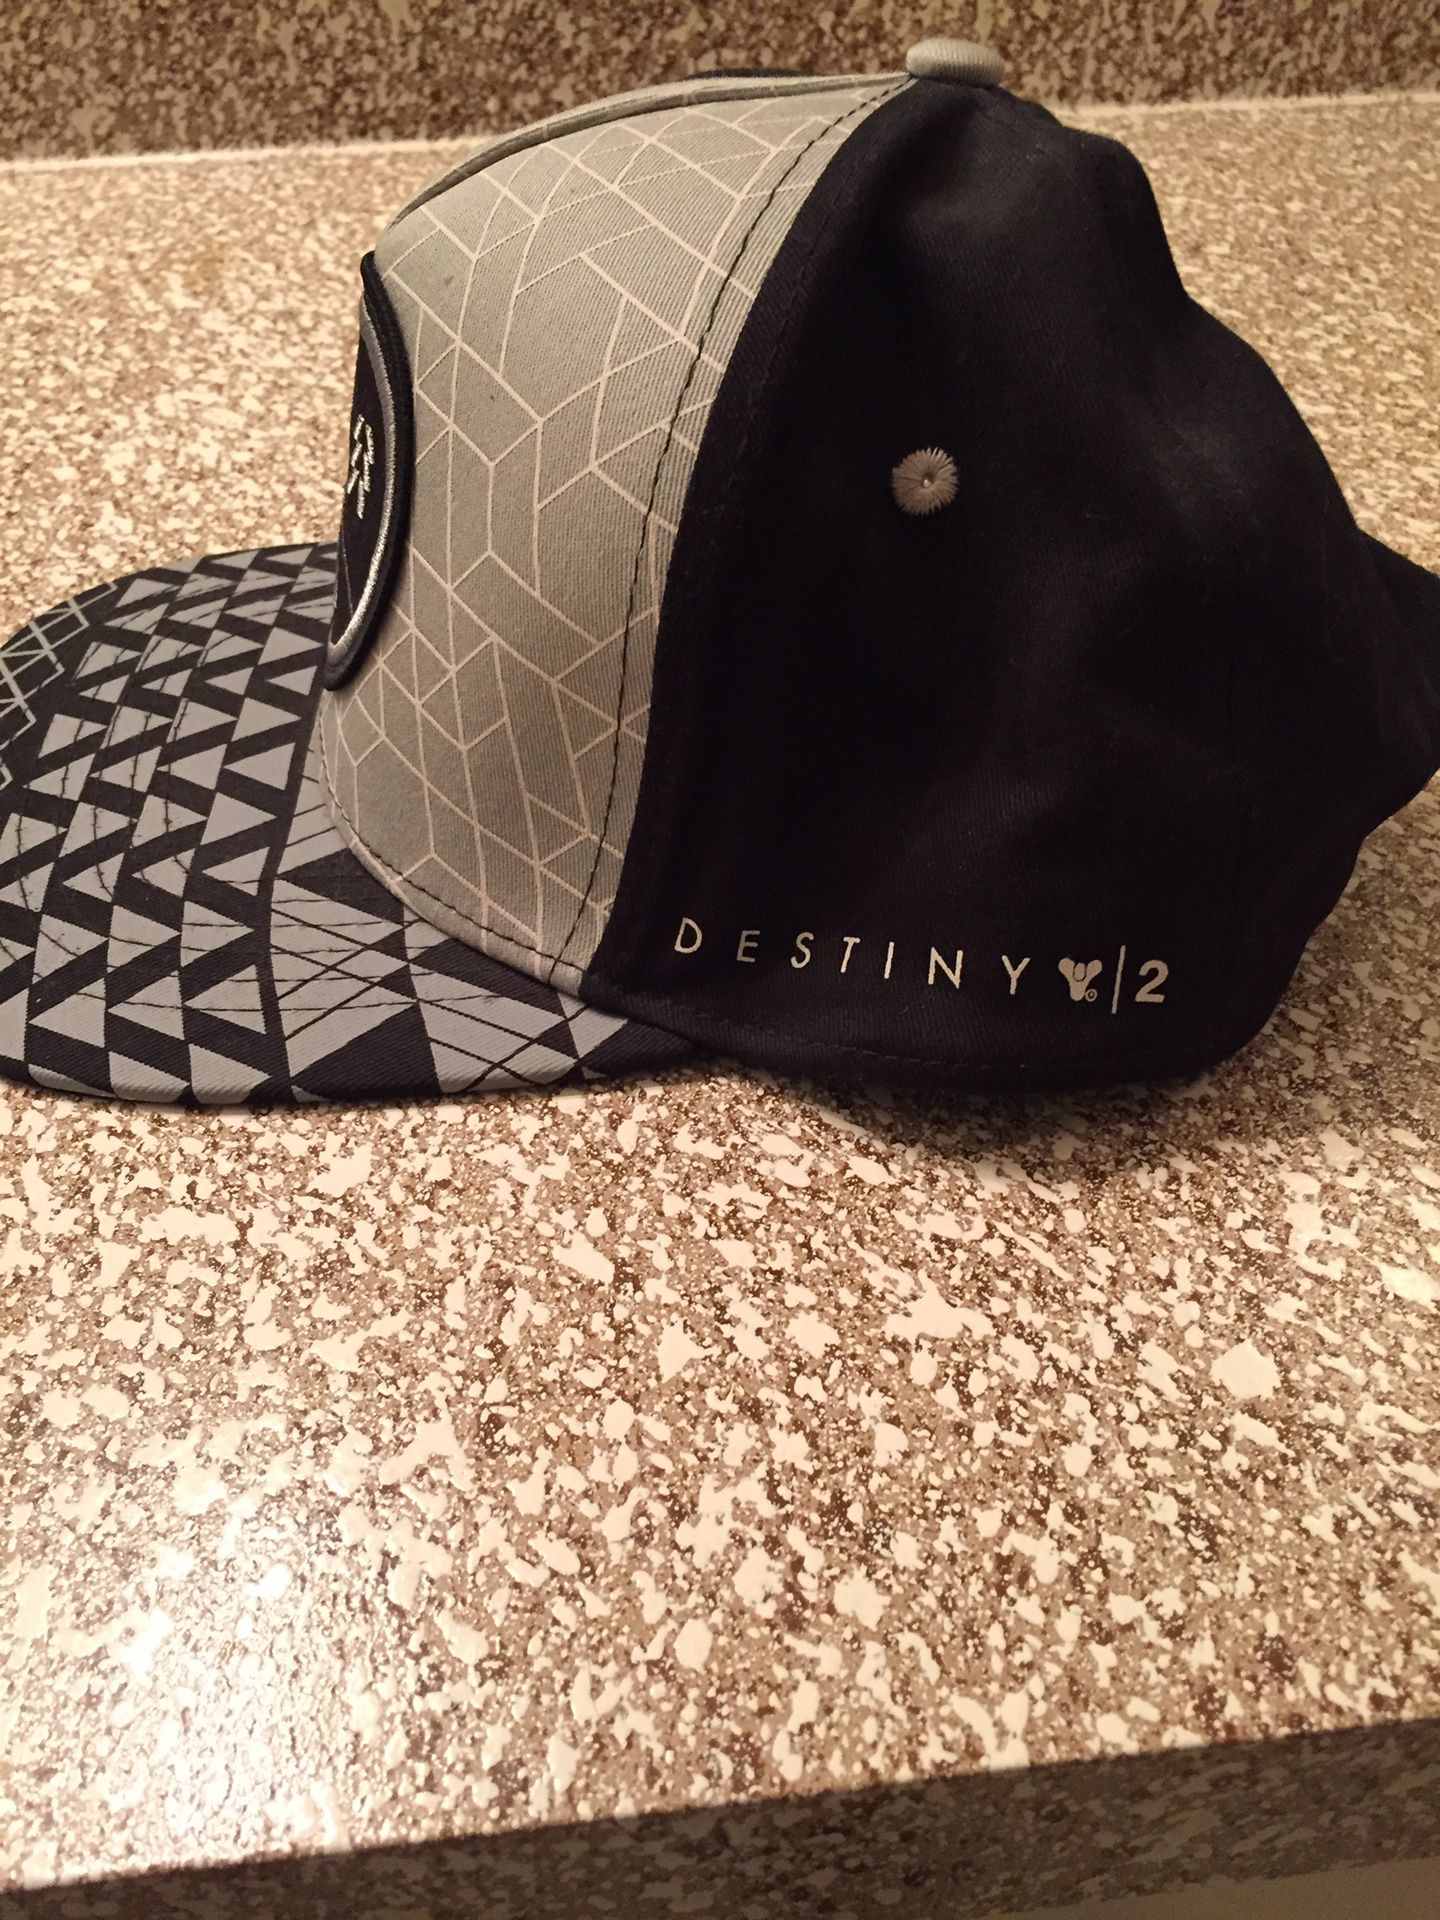 Destiny 2 hat